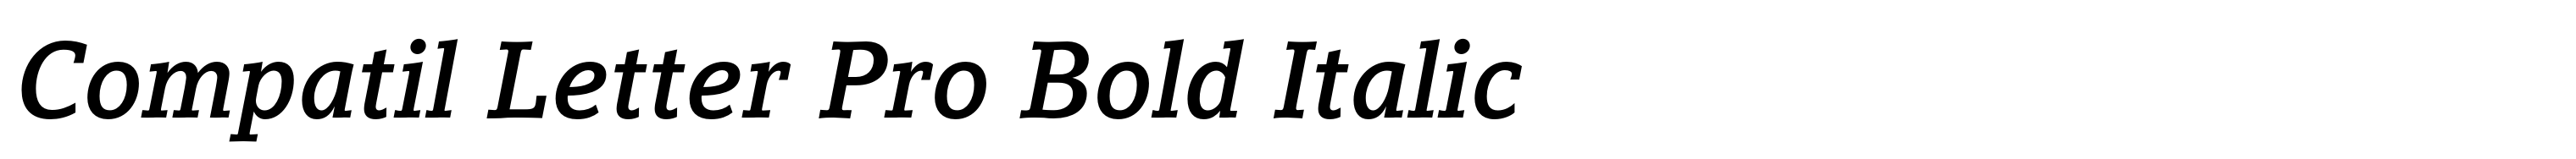 Compatil Letter Pro Bold Italic